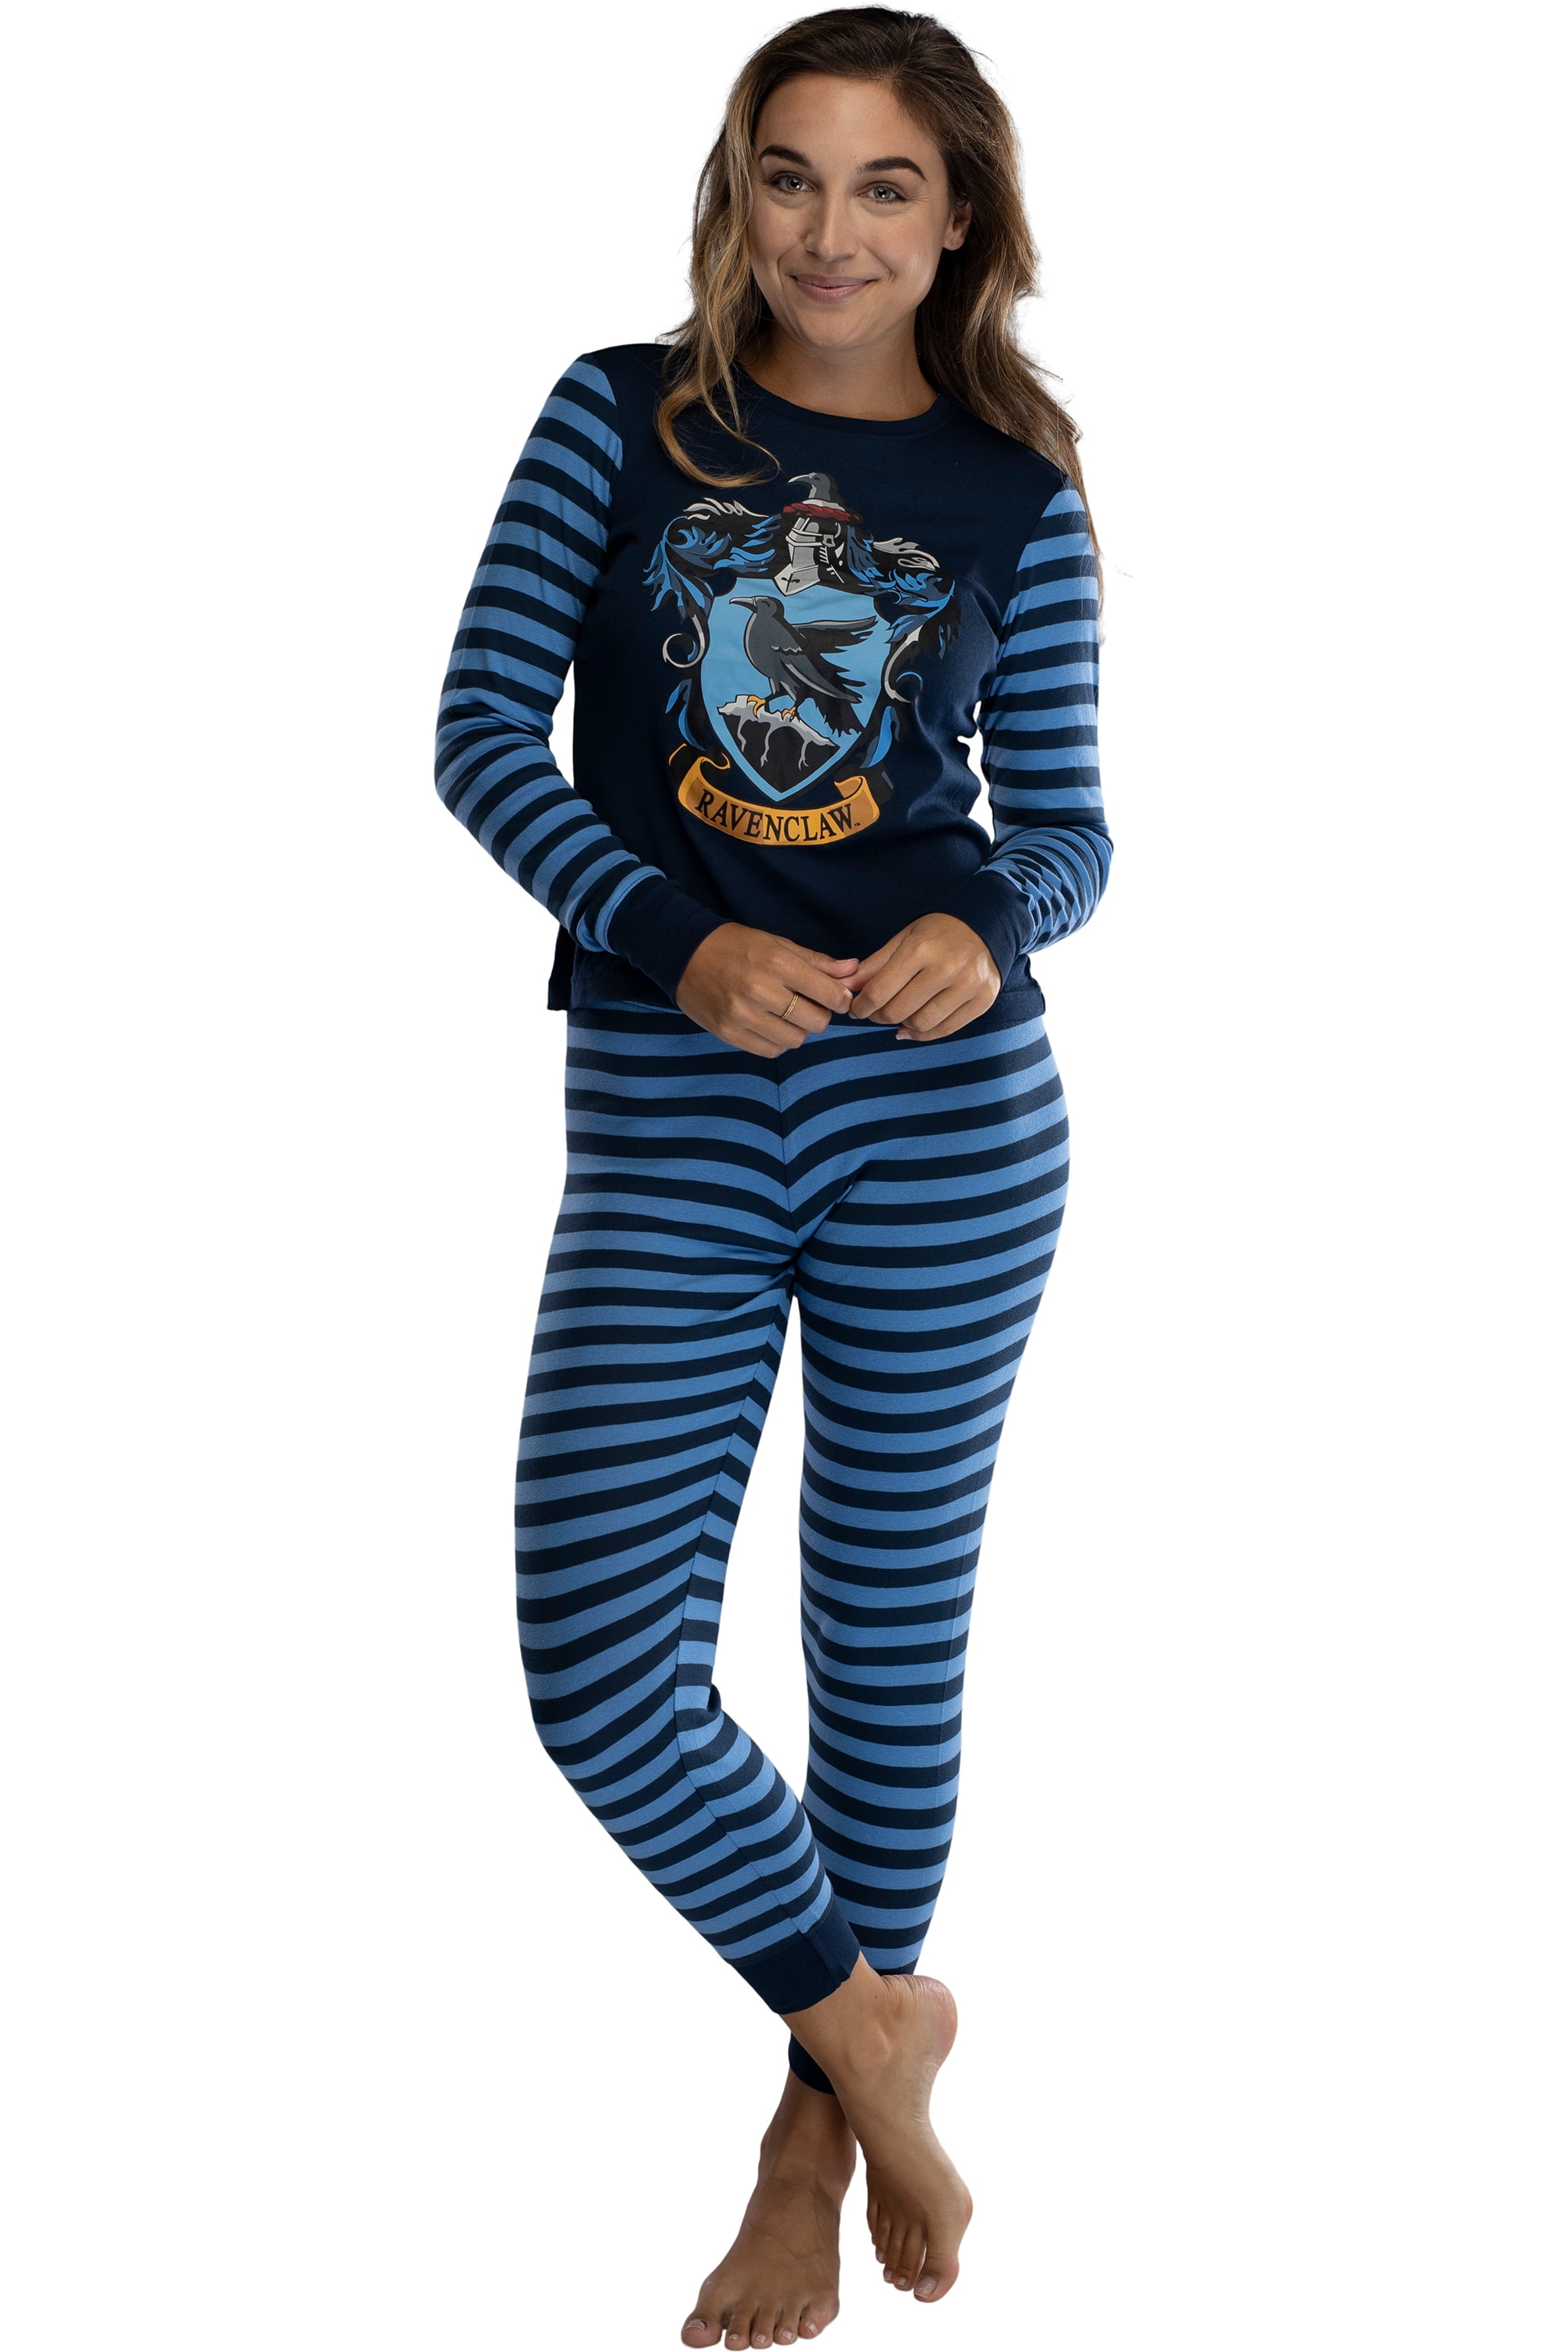 Harry Potter House Crest Tight Fit Adult Women's Pajama LG - Walmart.com